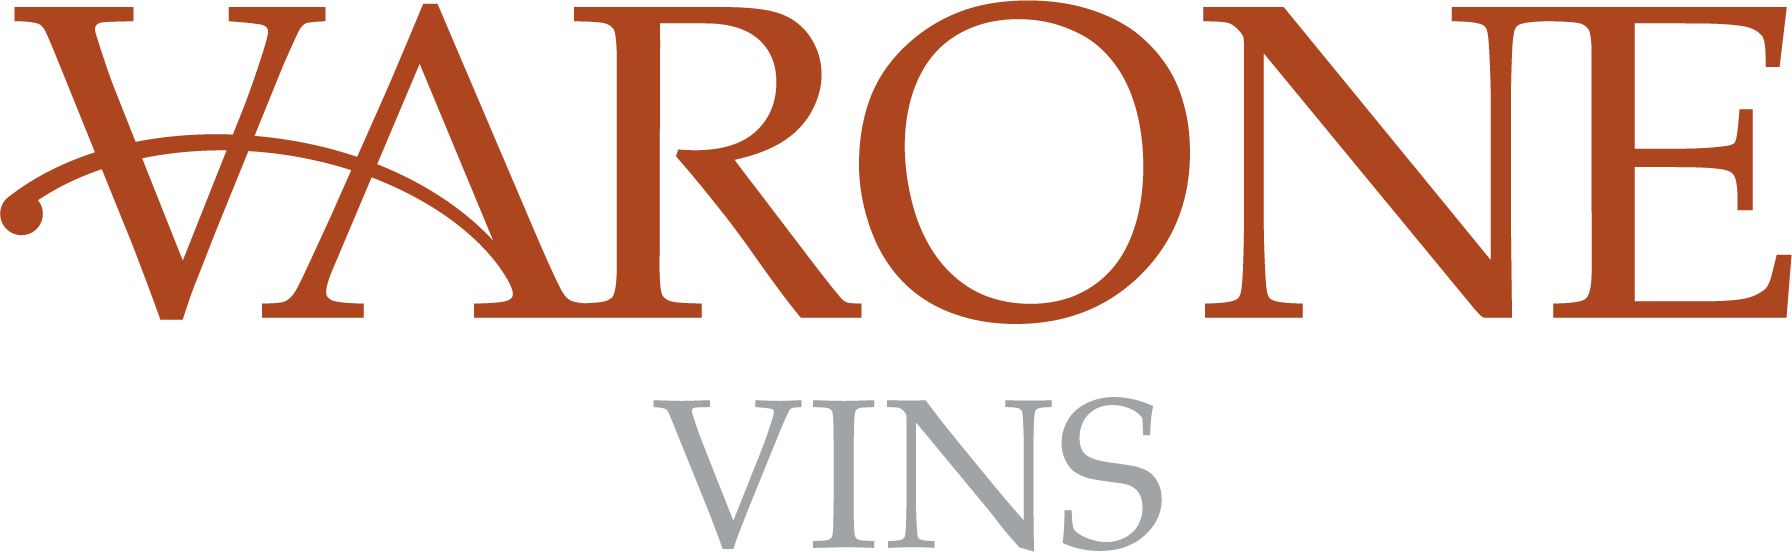 logo Varone Vins